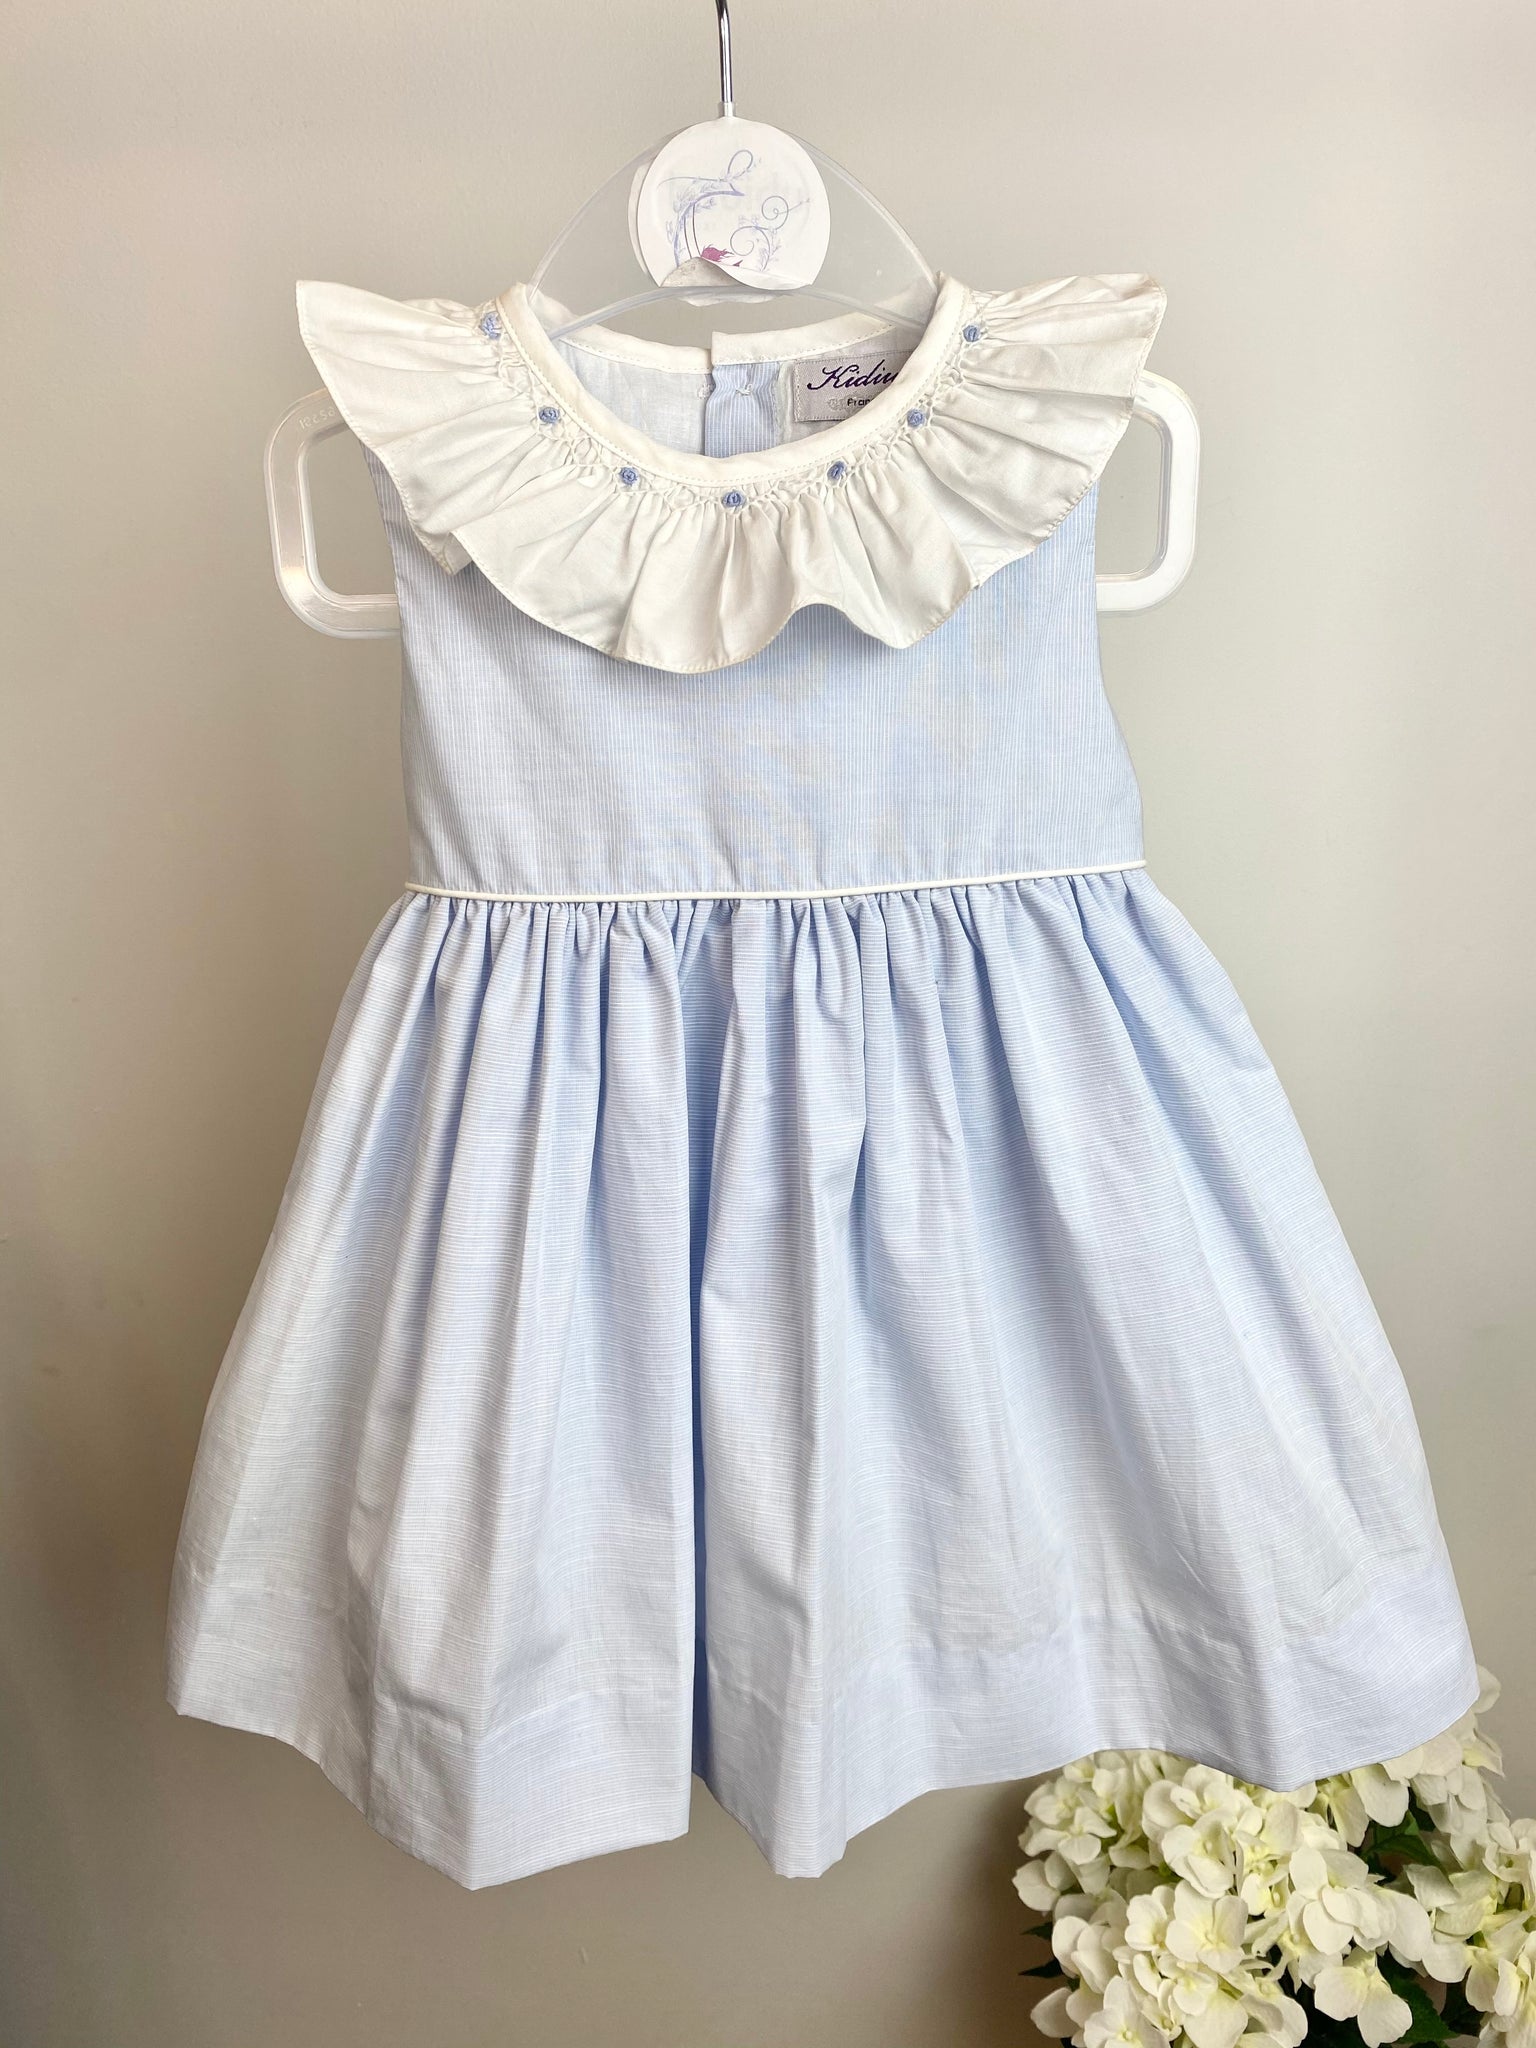 Kidiwi Girl's Pale Blue Dress